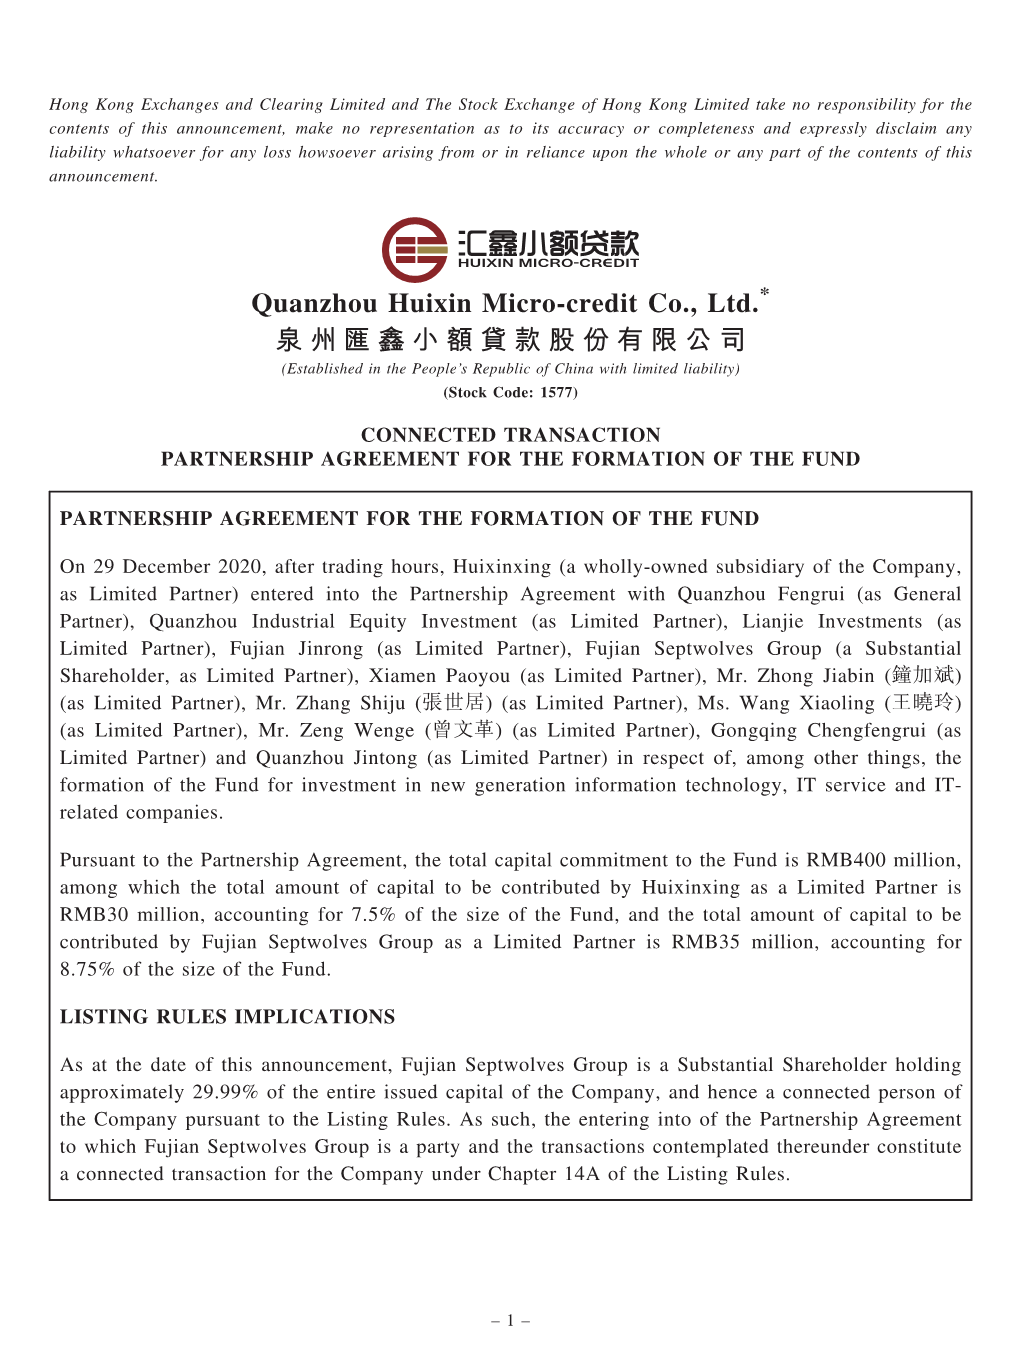 Quanzhou Huixin Micro-Credit Co., Ltd. 泉州匯鑫小額